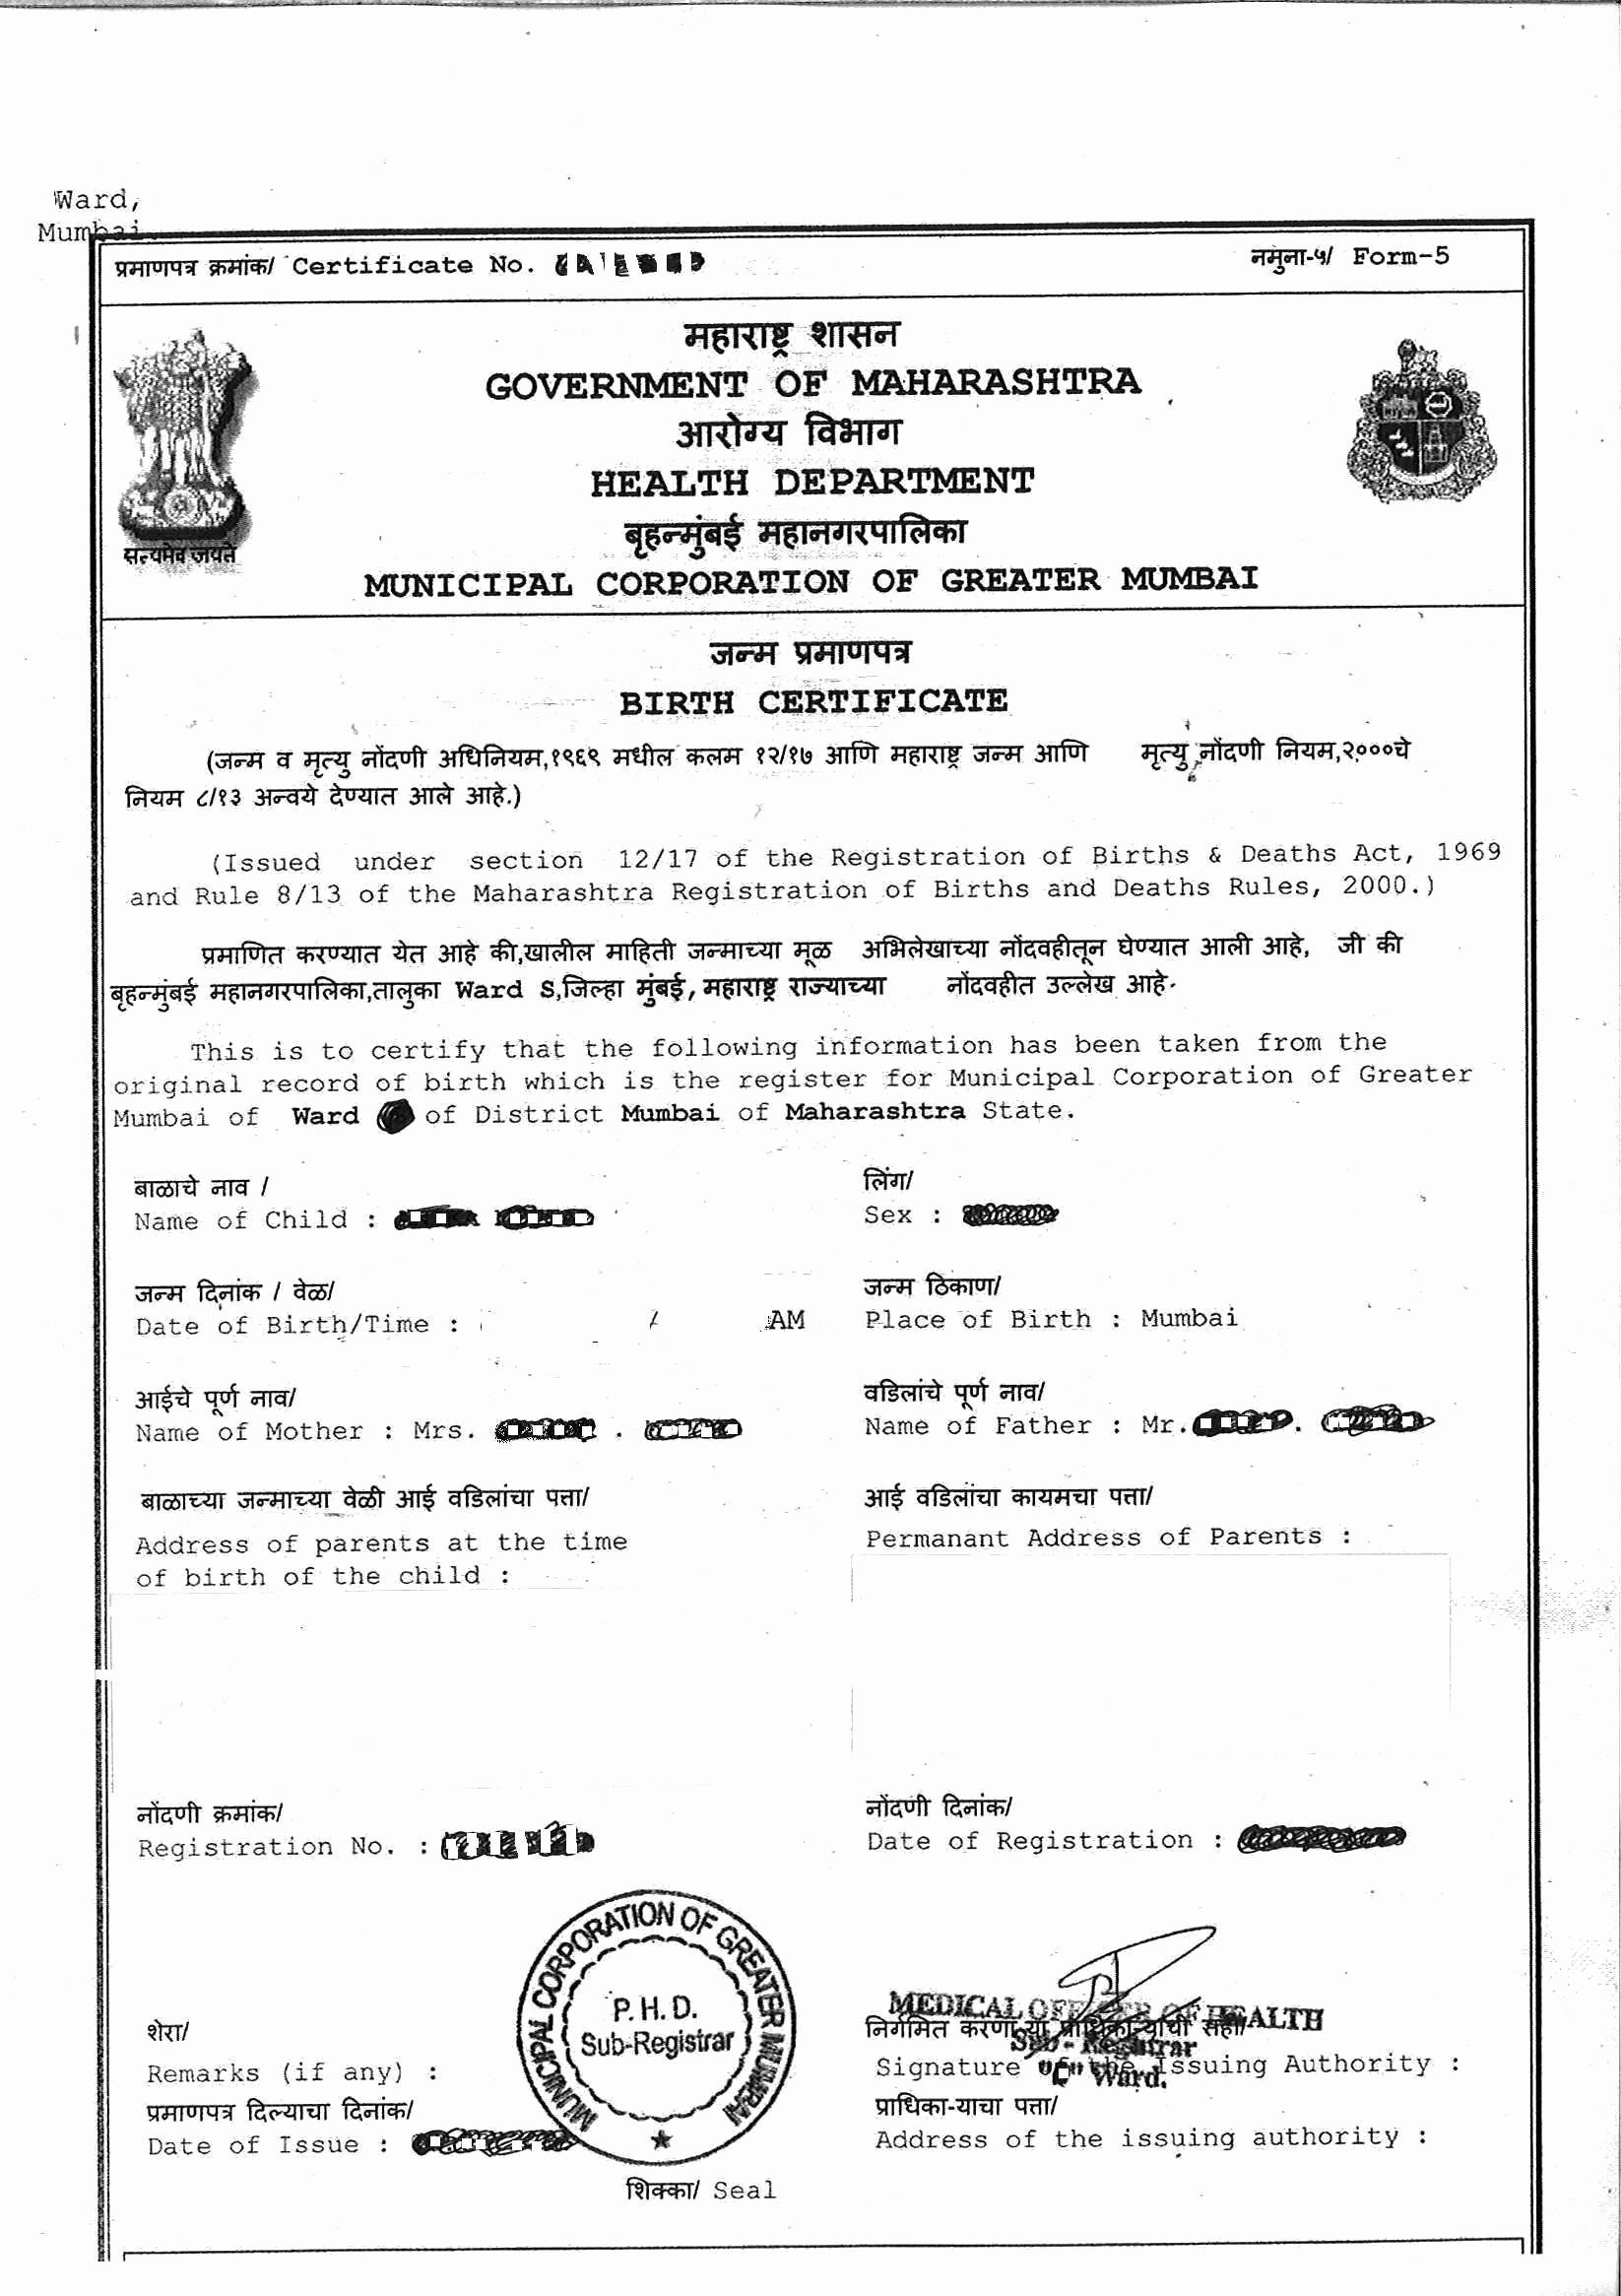 Fake Death Certificate Template Luxury Fake Death Certificate Special Fake Death Certificate